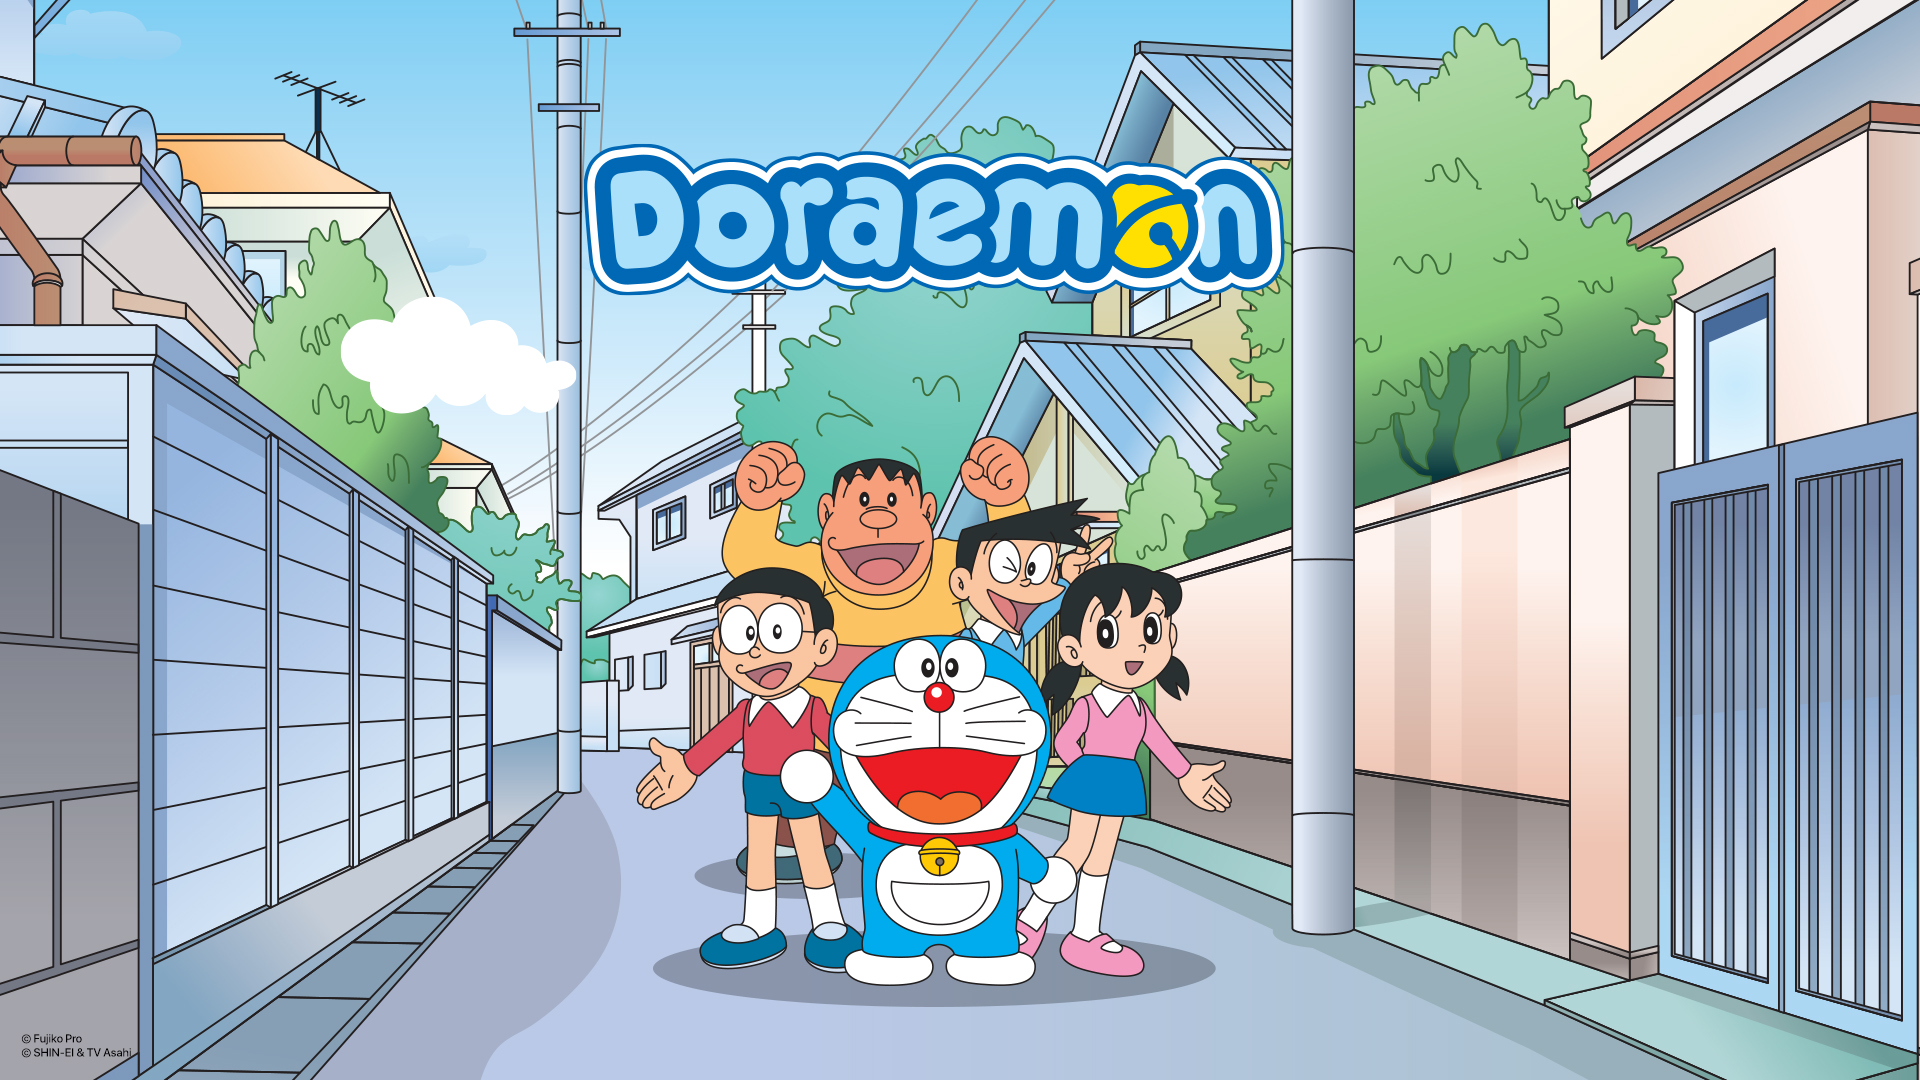 Pictures of Doraemon movies